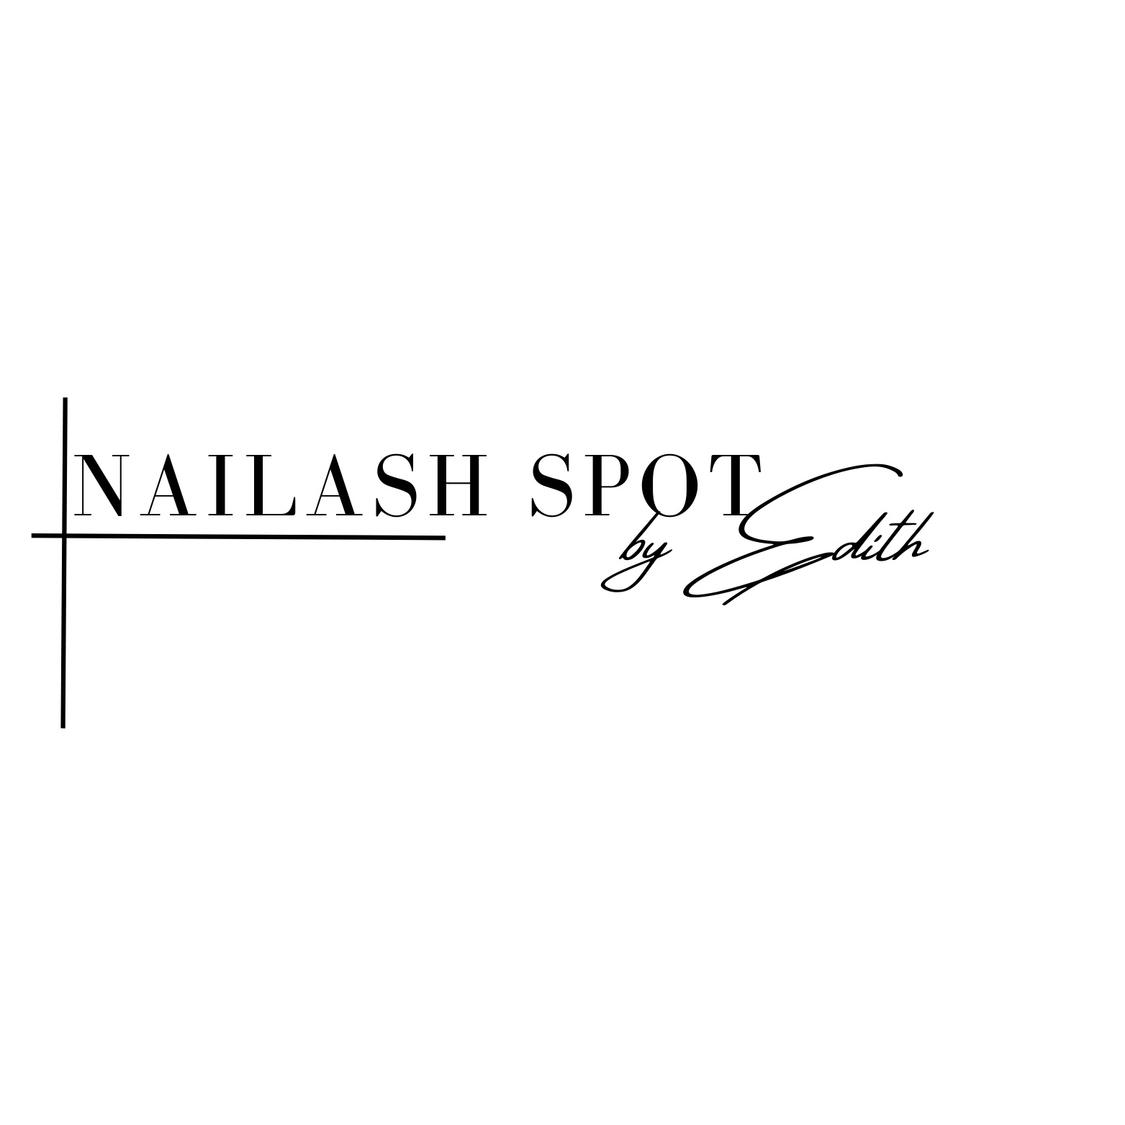 NailashbyEdith's images